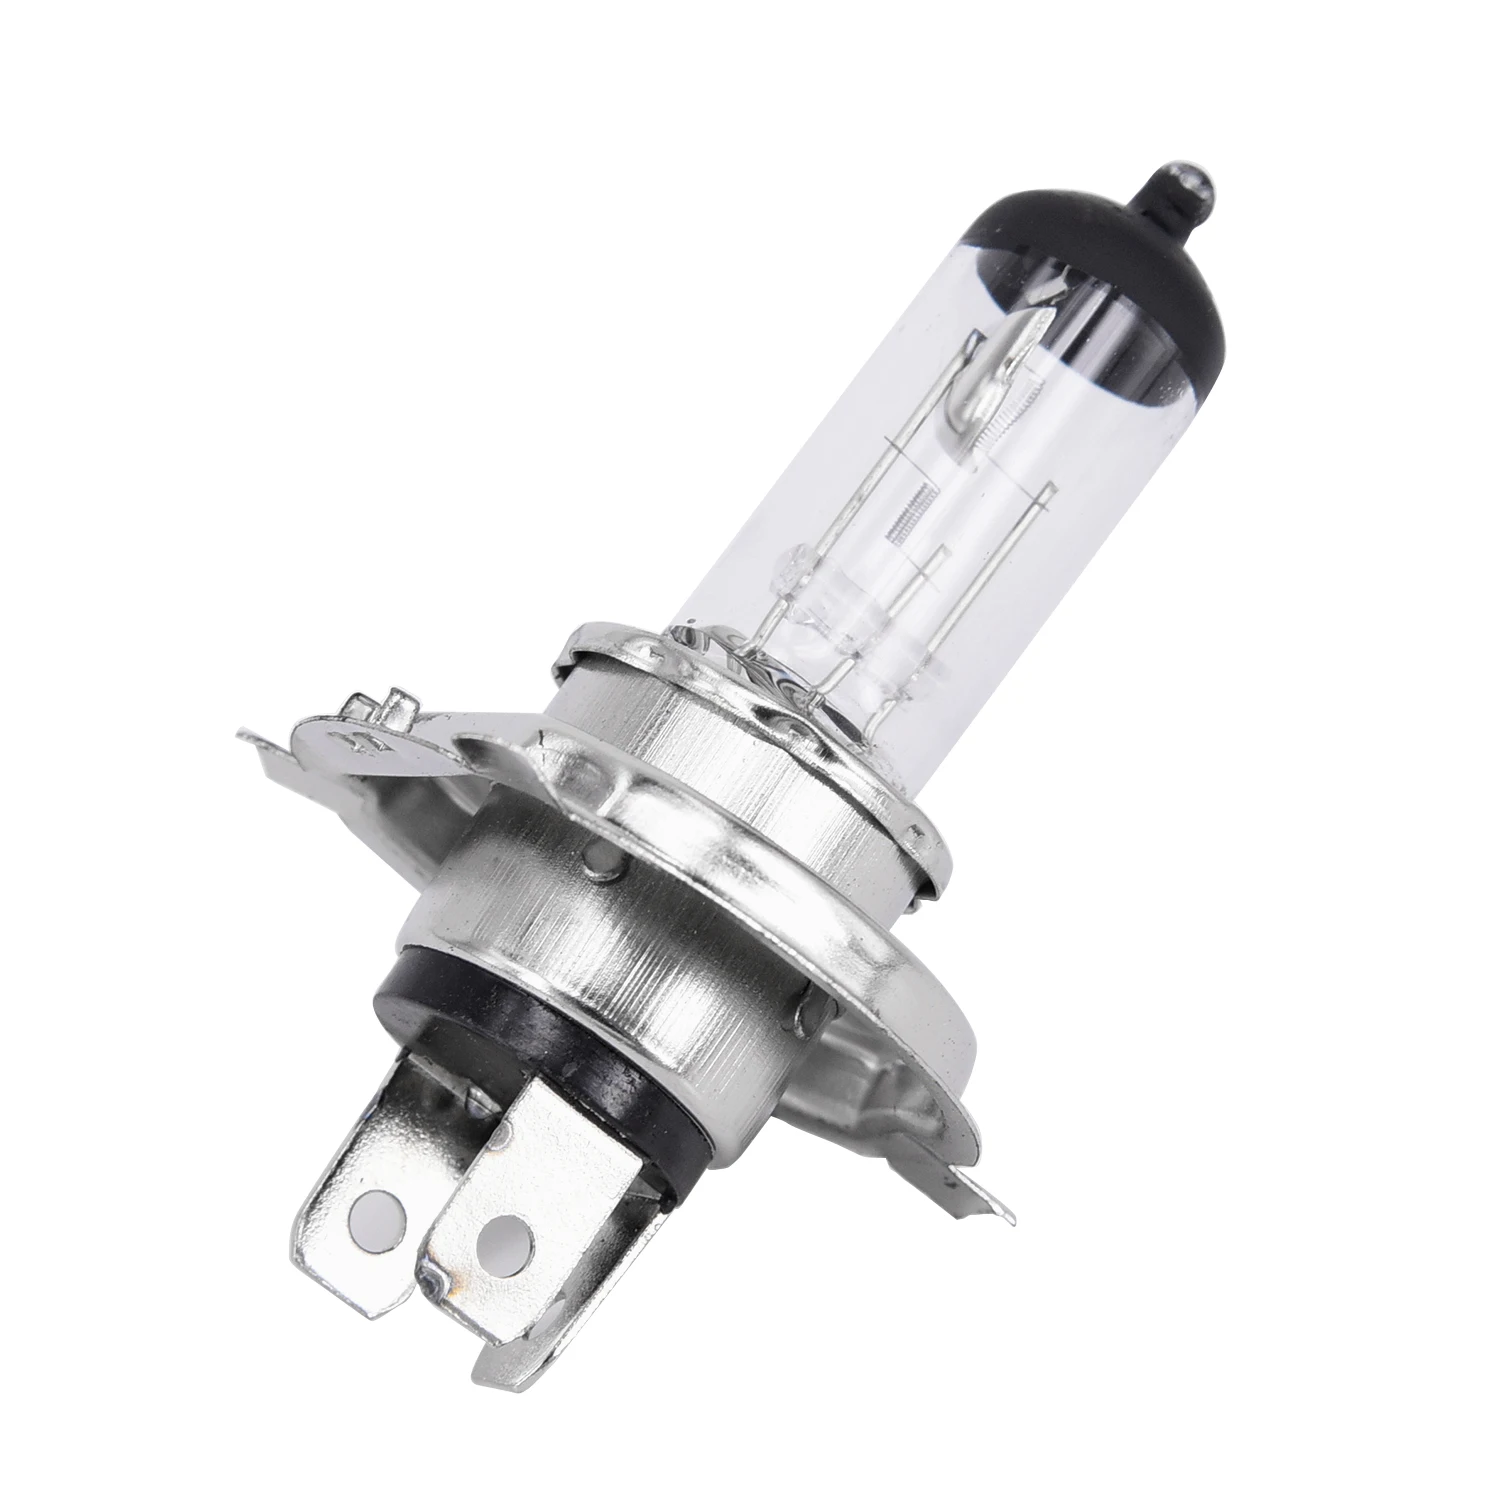 

1pc H4 100W Car Xenon Gas Halogen Headlight Headlamp DC12V 6A 4300K Yellow Lamp Bulbs With Aluminum Alloy Base